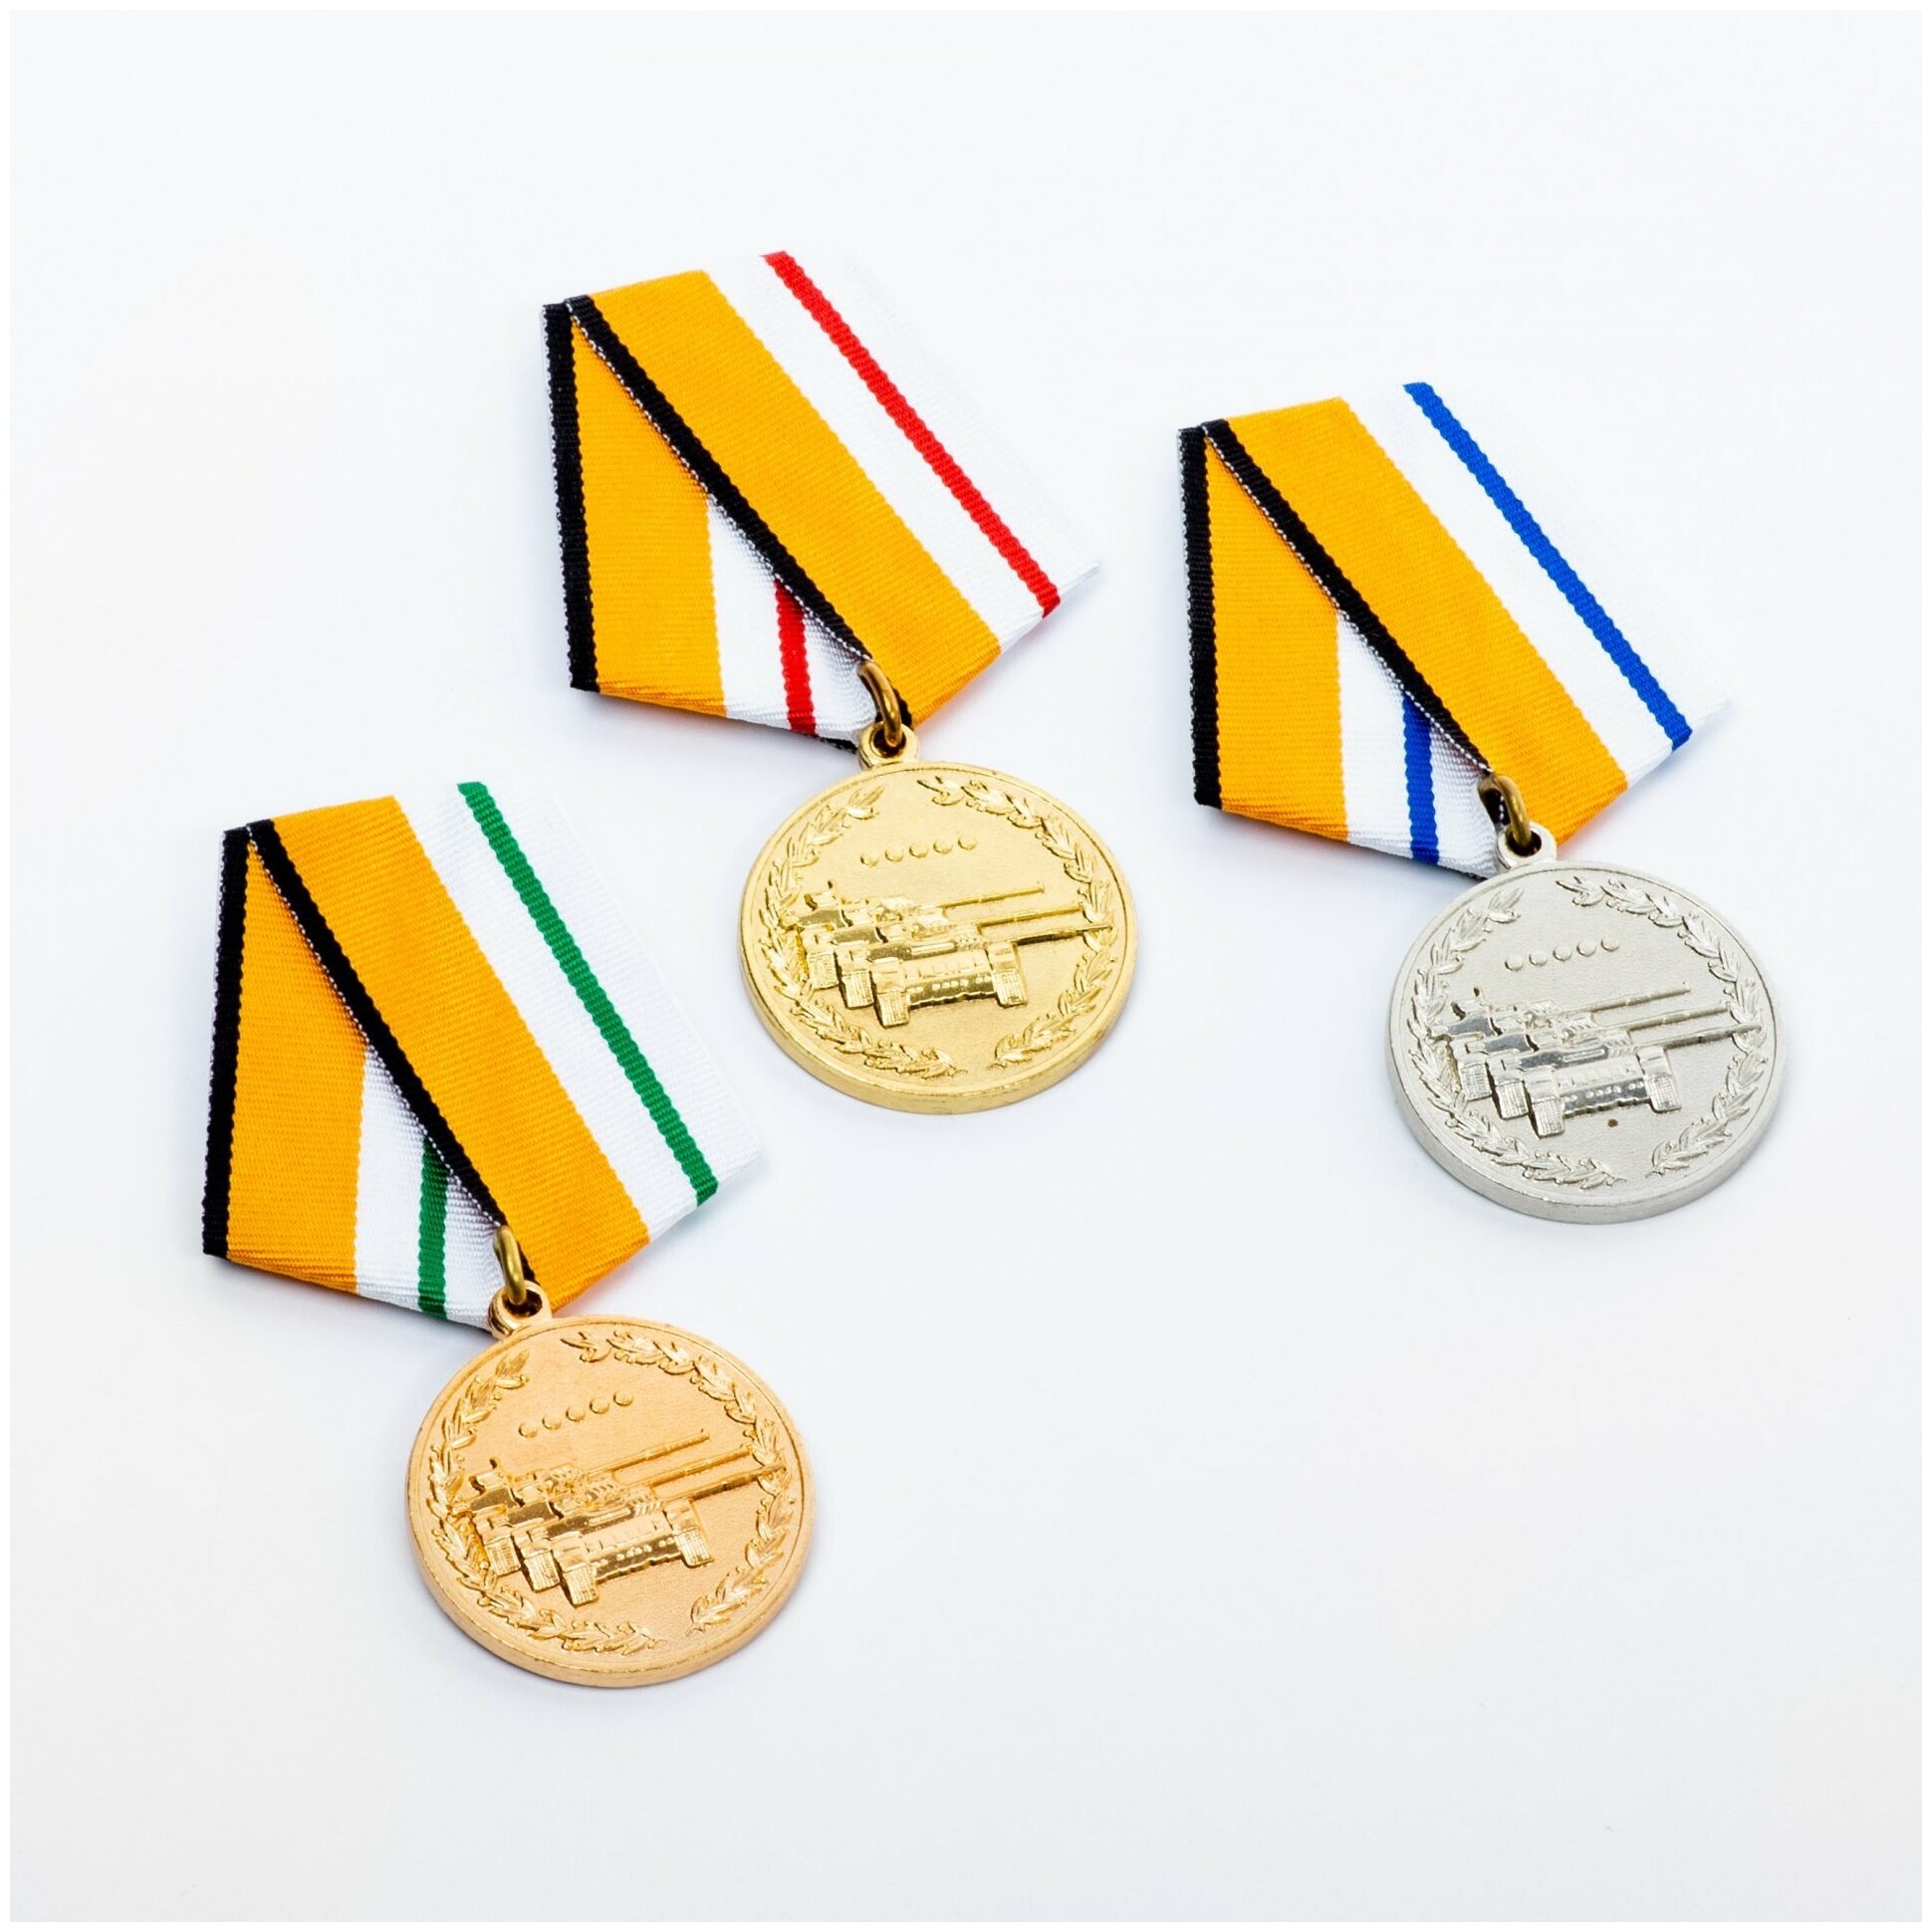 Медаль "Чемпионат мира 2014. Танковый биатлон" набор I, II, III место, 2015